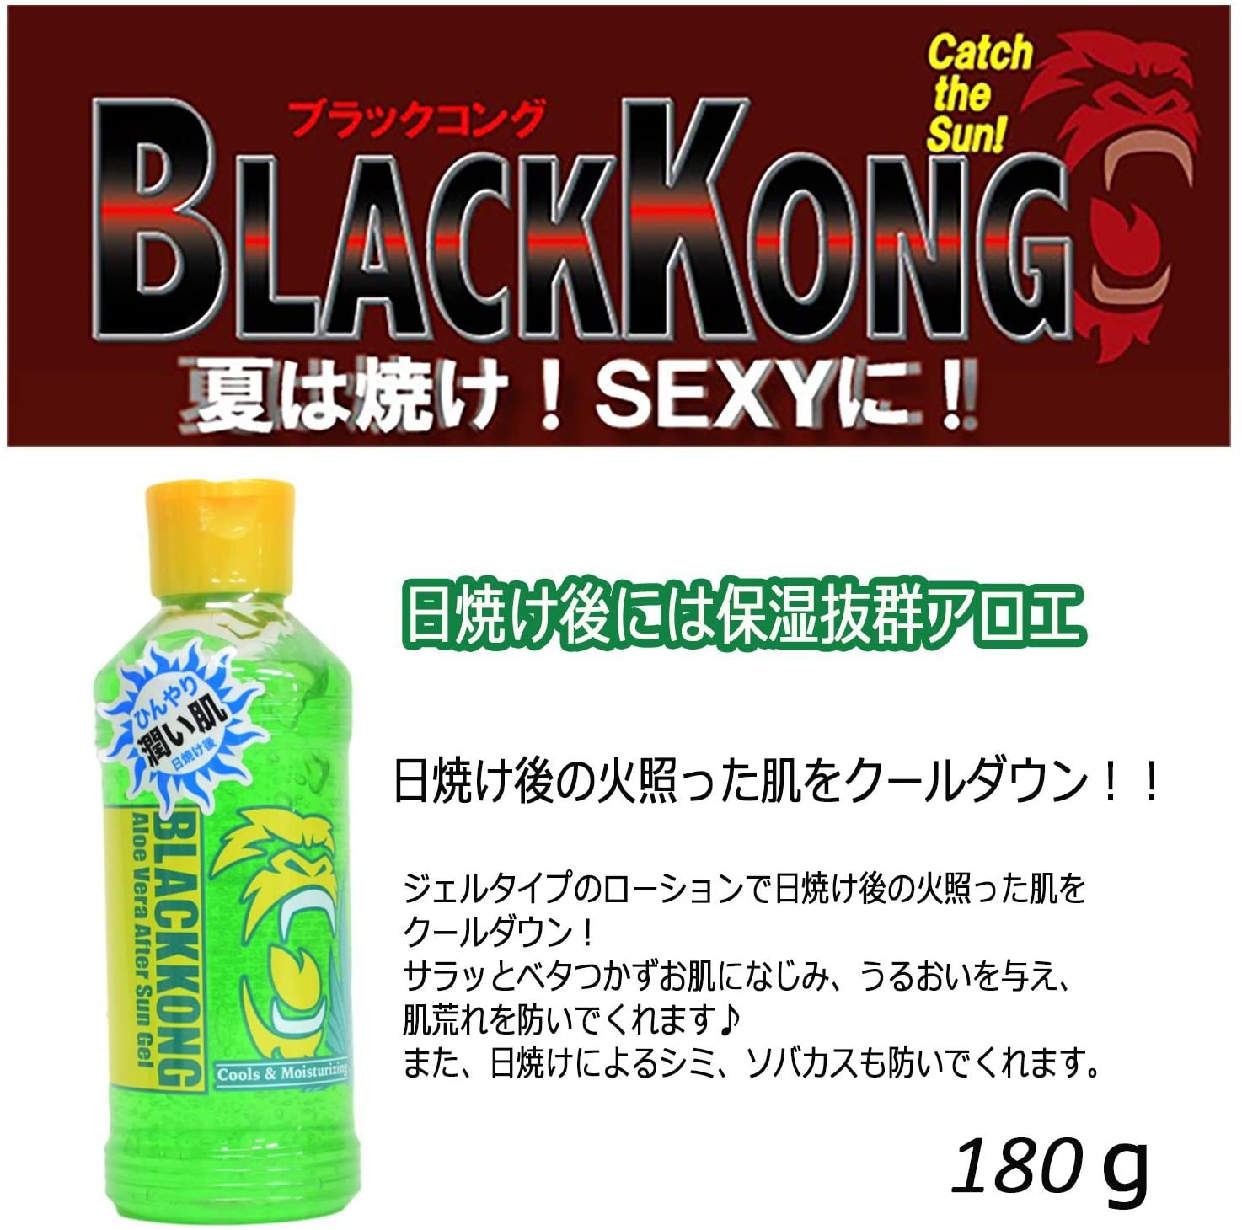 BLACKKONG(ブラックコング) モイスチャライジングジェルの商品画像2 